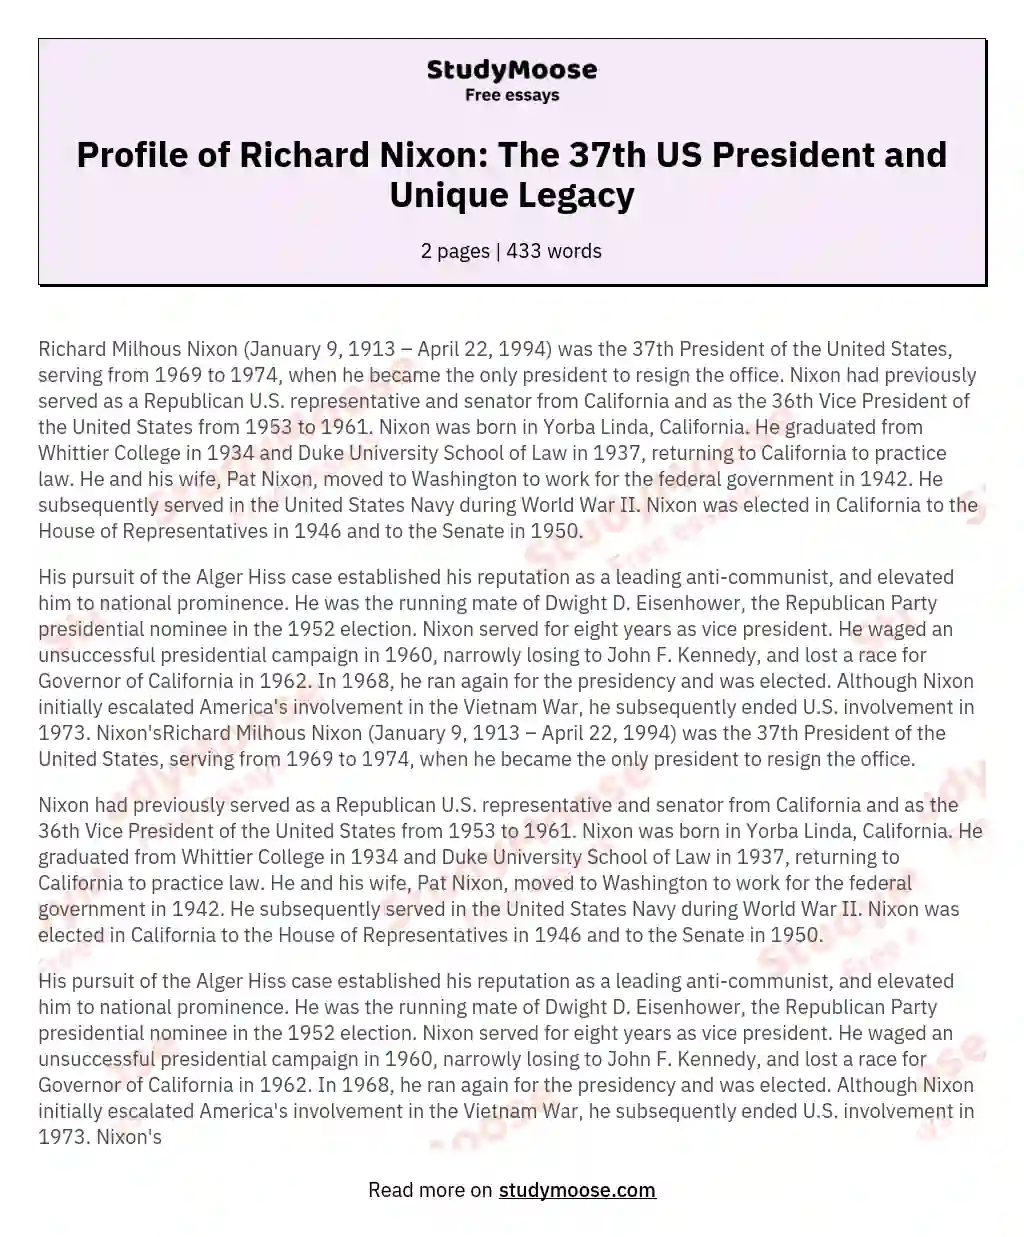 Profile of Richard Nixon: The 37th US President and Unique Legacy essay